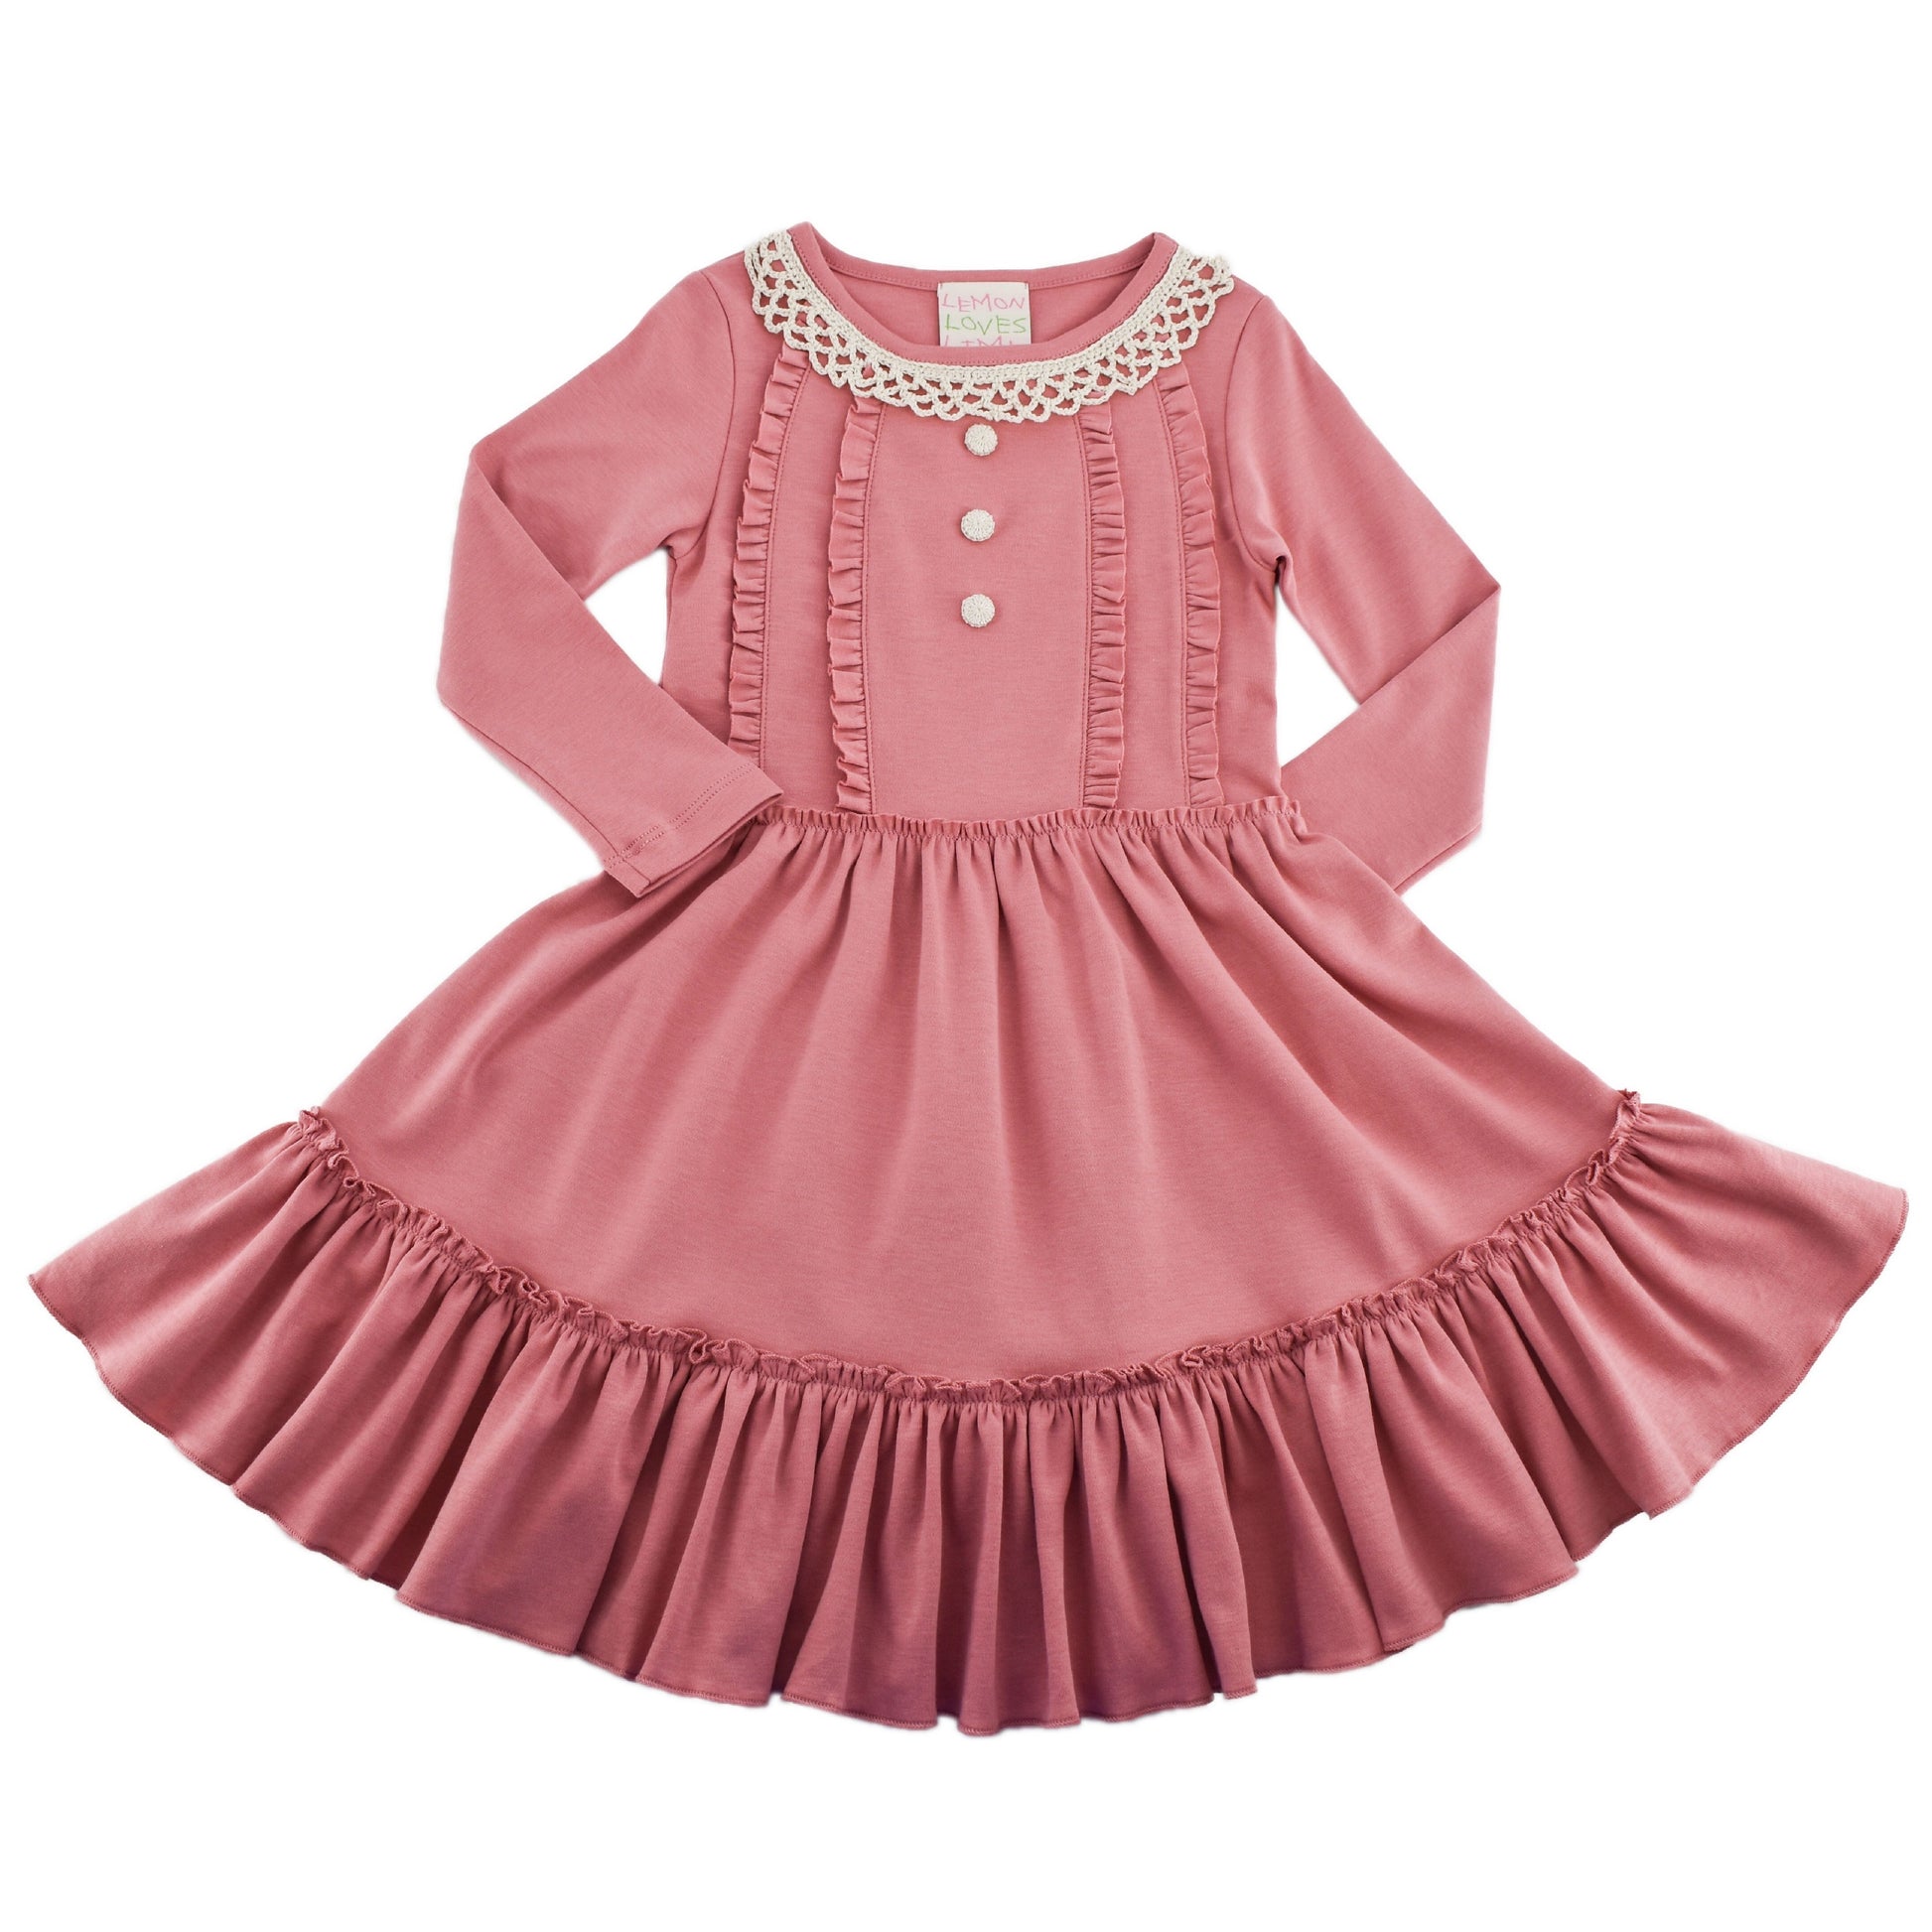 Genteel Dress in Mauve Glow  - Doodlebug's Children's Boutique